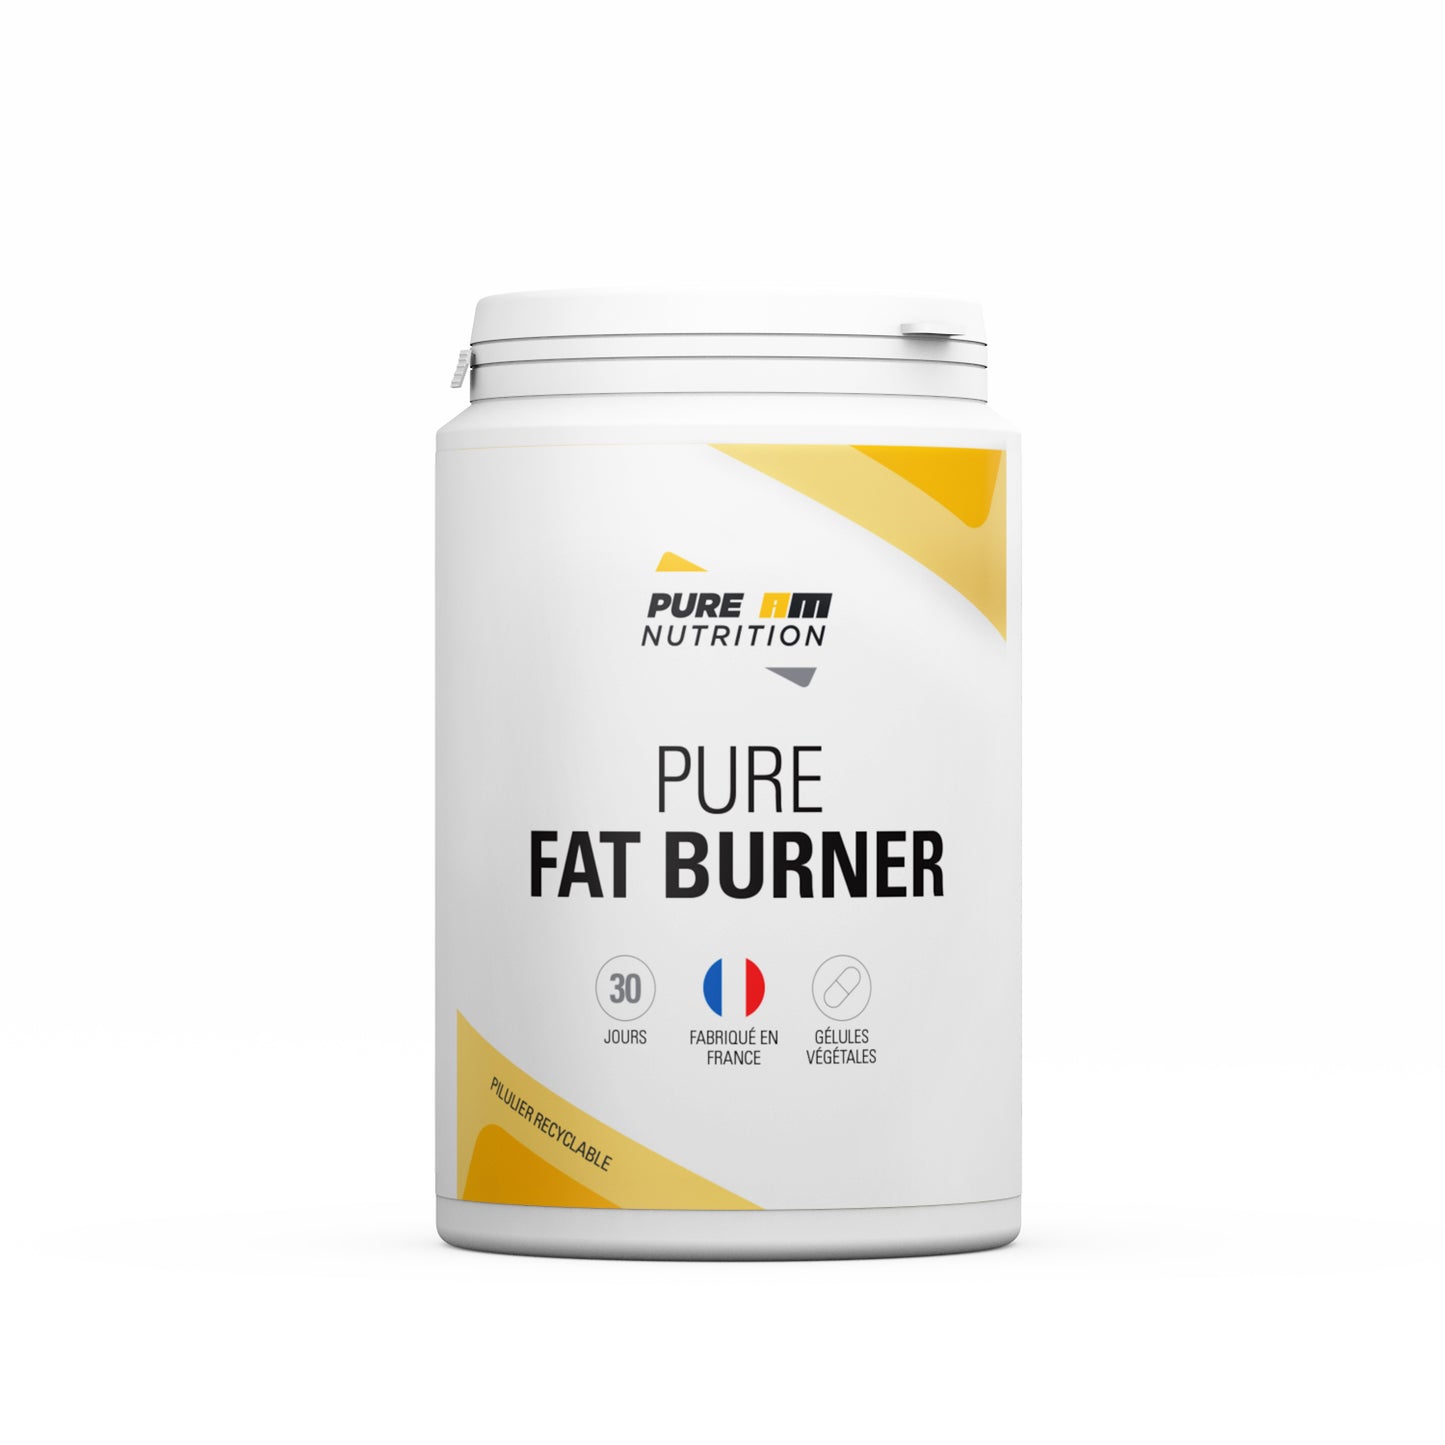 Fat Burner PURE AM Nutrition